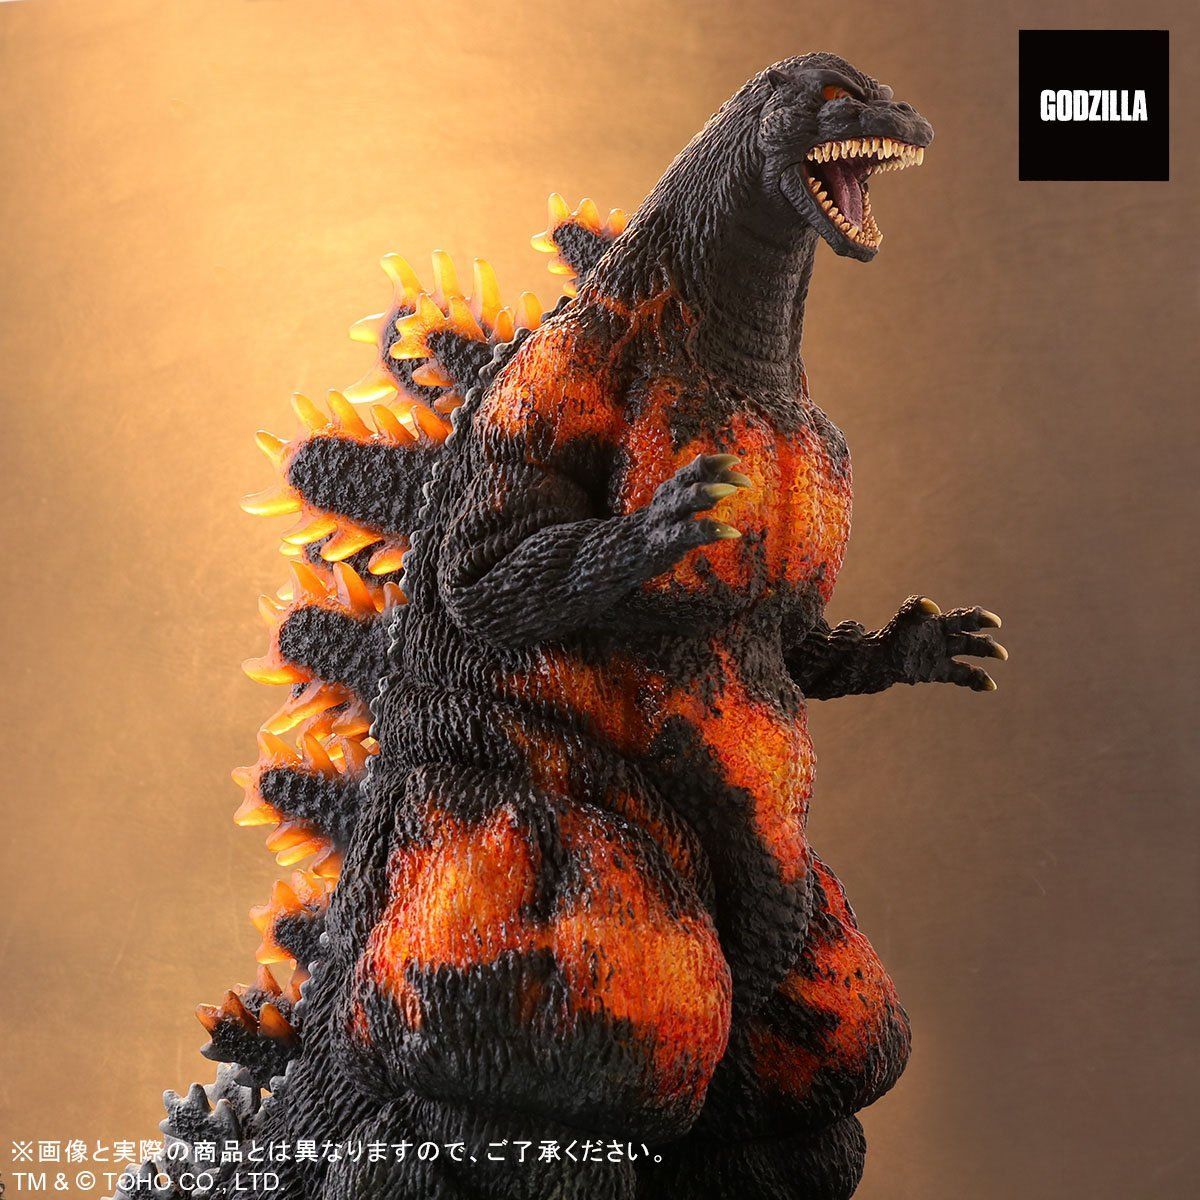 1995 PRE Toho 30cm Series Godzilla Burning Clear Ver X-PLUS Limited in Japan 